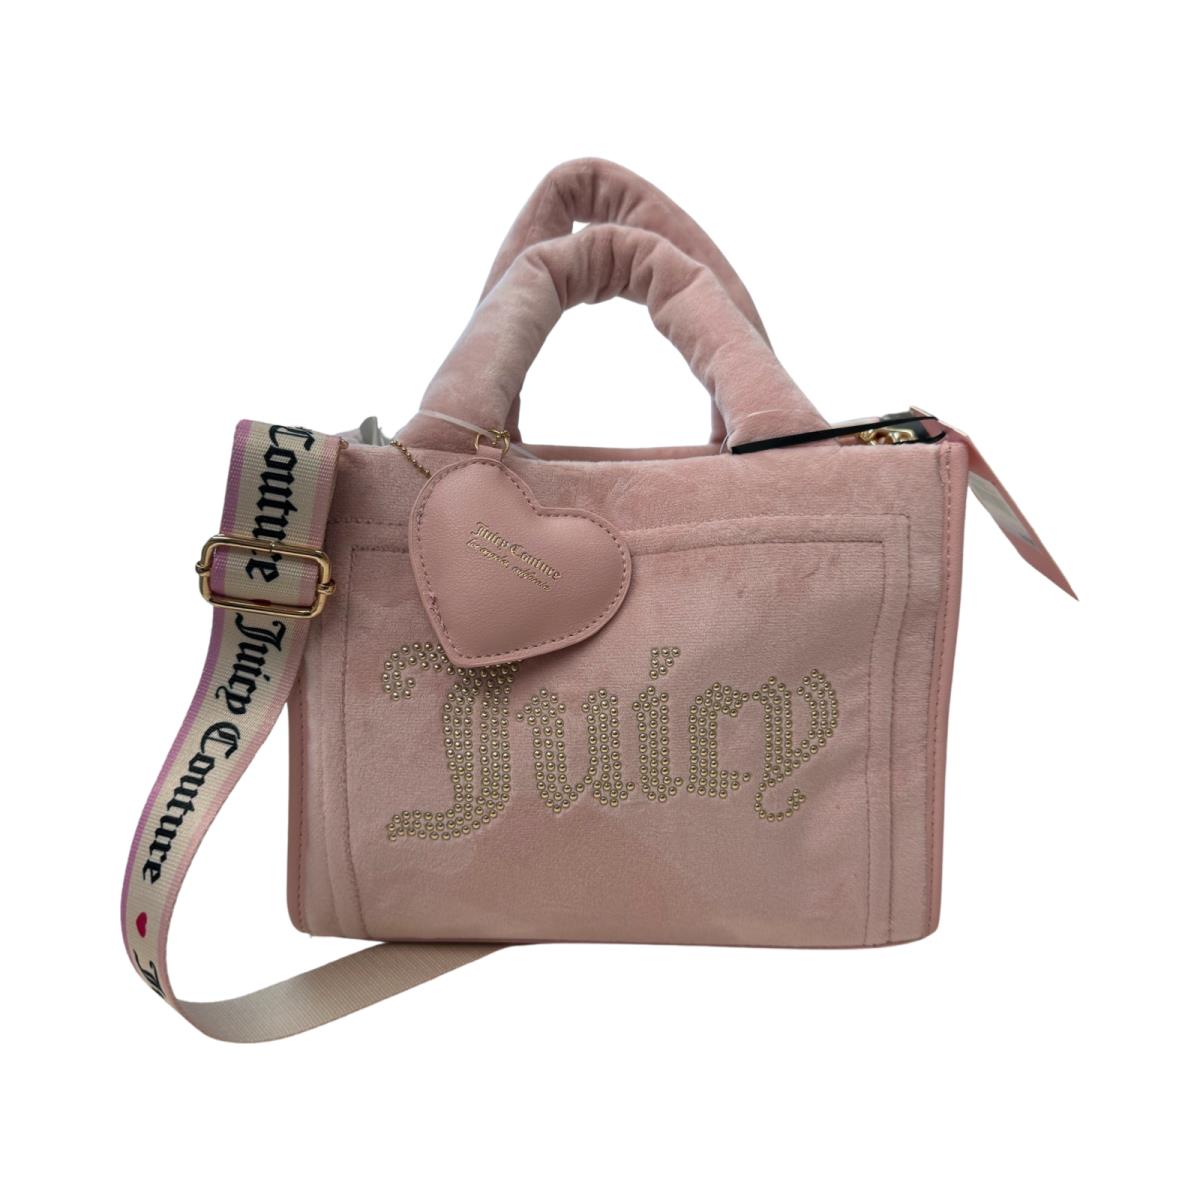 Juicy Couture Extra Spender Mini Tote Bag Velour Purse Pink Diamond